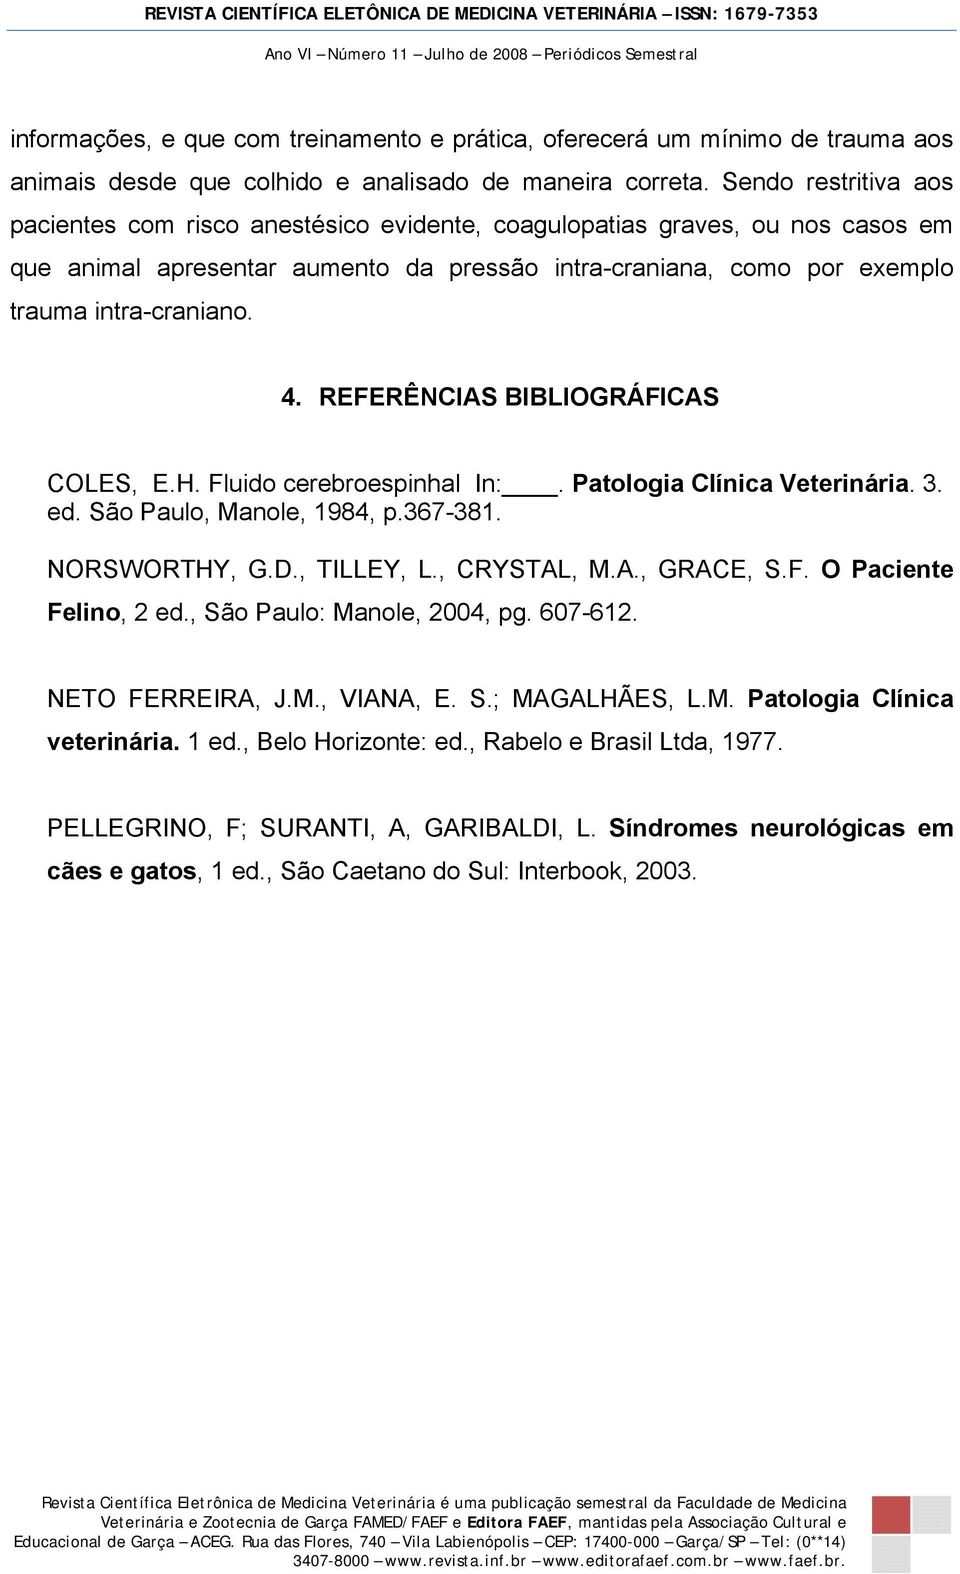 REFERÊNCIAS BIBLIOGRÁFICAS COLES, E.H. Fluido cerebroespinhal In:. Patologia Clínica Veterinária. 3. ed. São Paulo, Manole, 1984, p.367-381. NORSWORTHY, G.D., TILLEY, L., CRYSTAL, M.A., GRACE, S.F. O Paciente Felino, 2 ed.